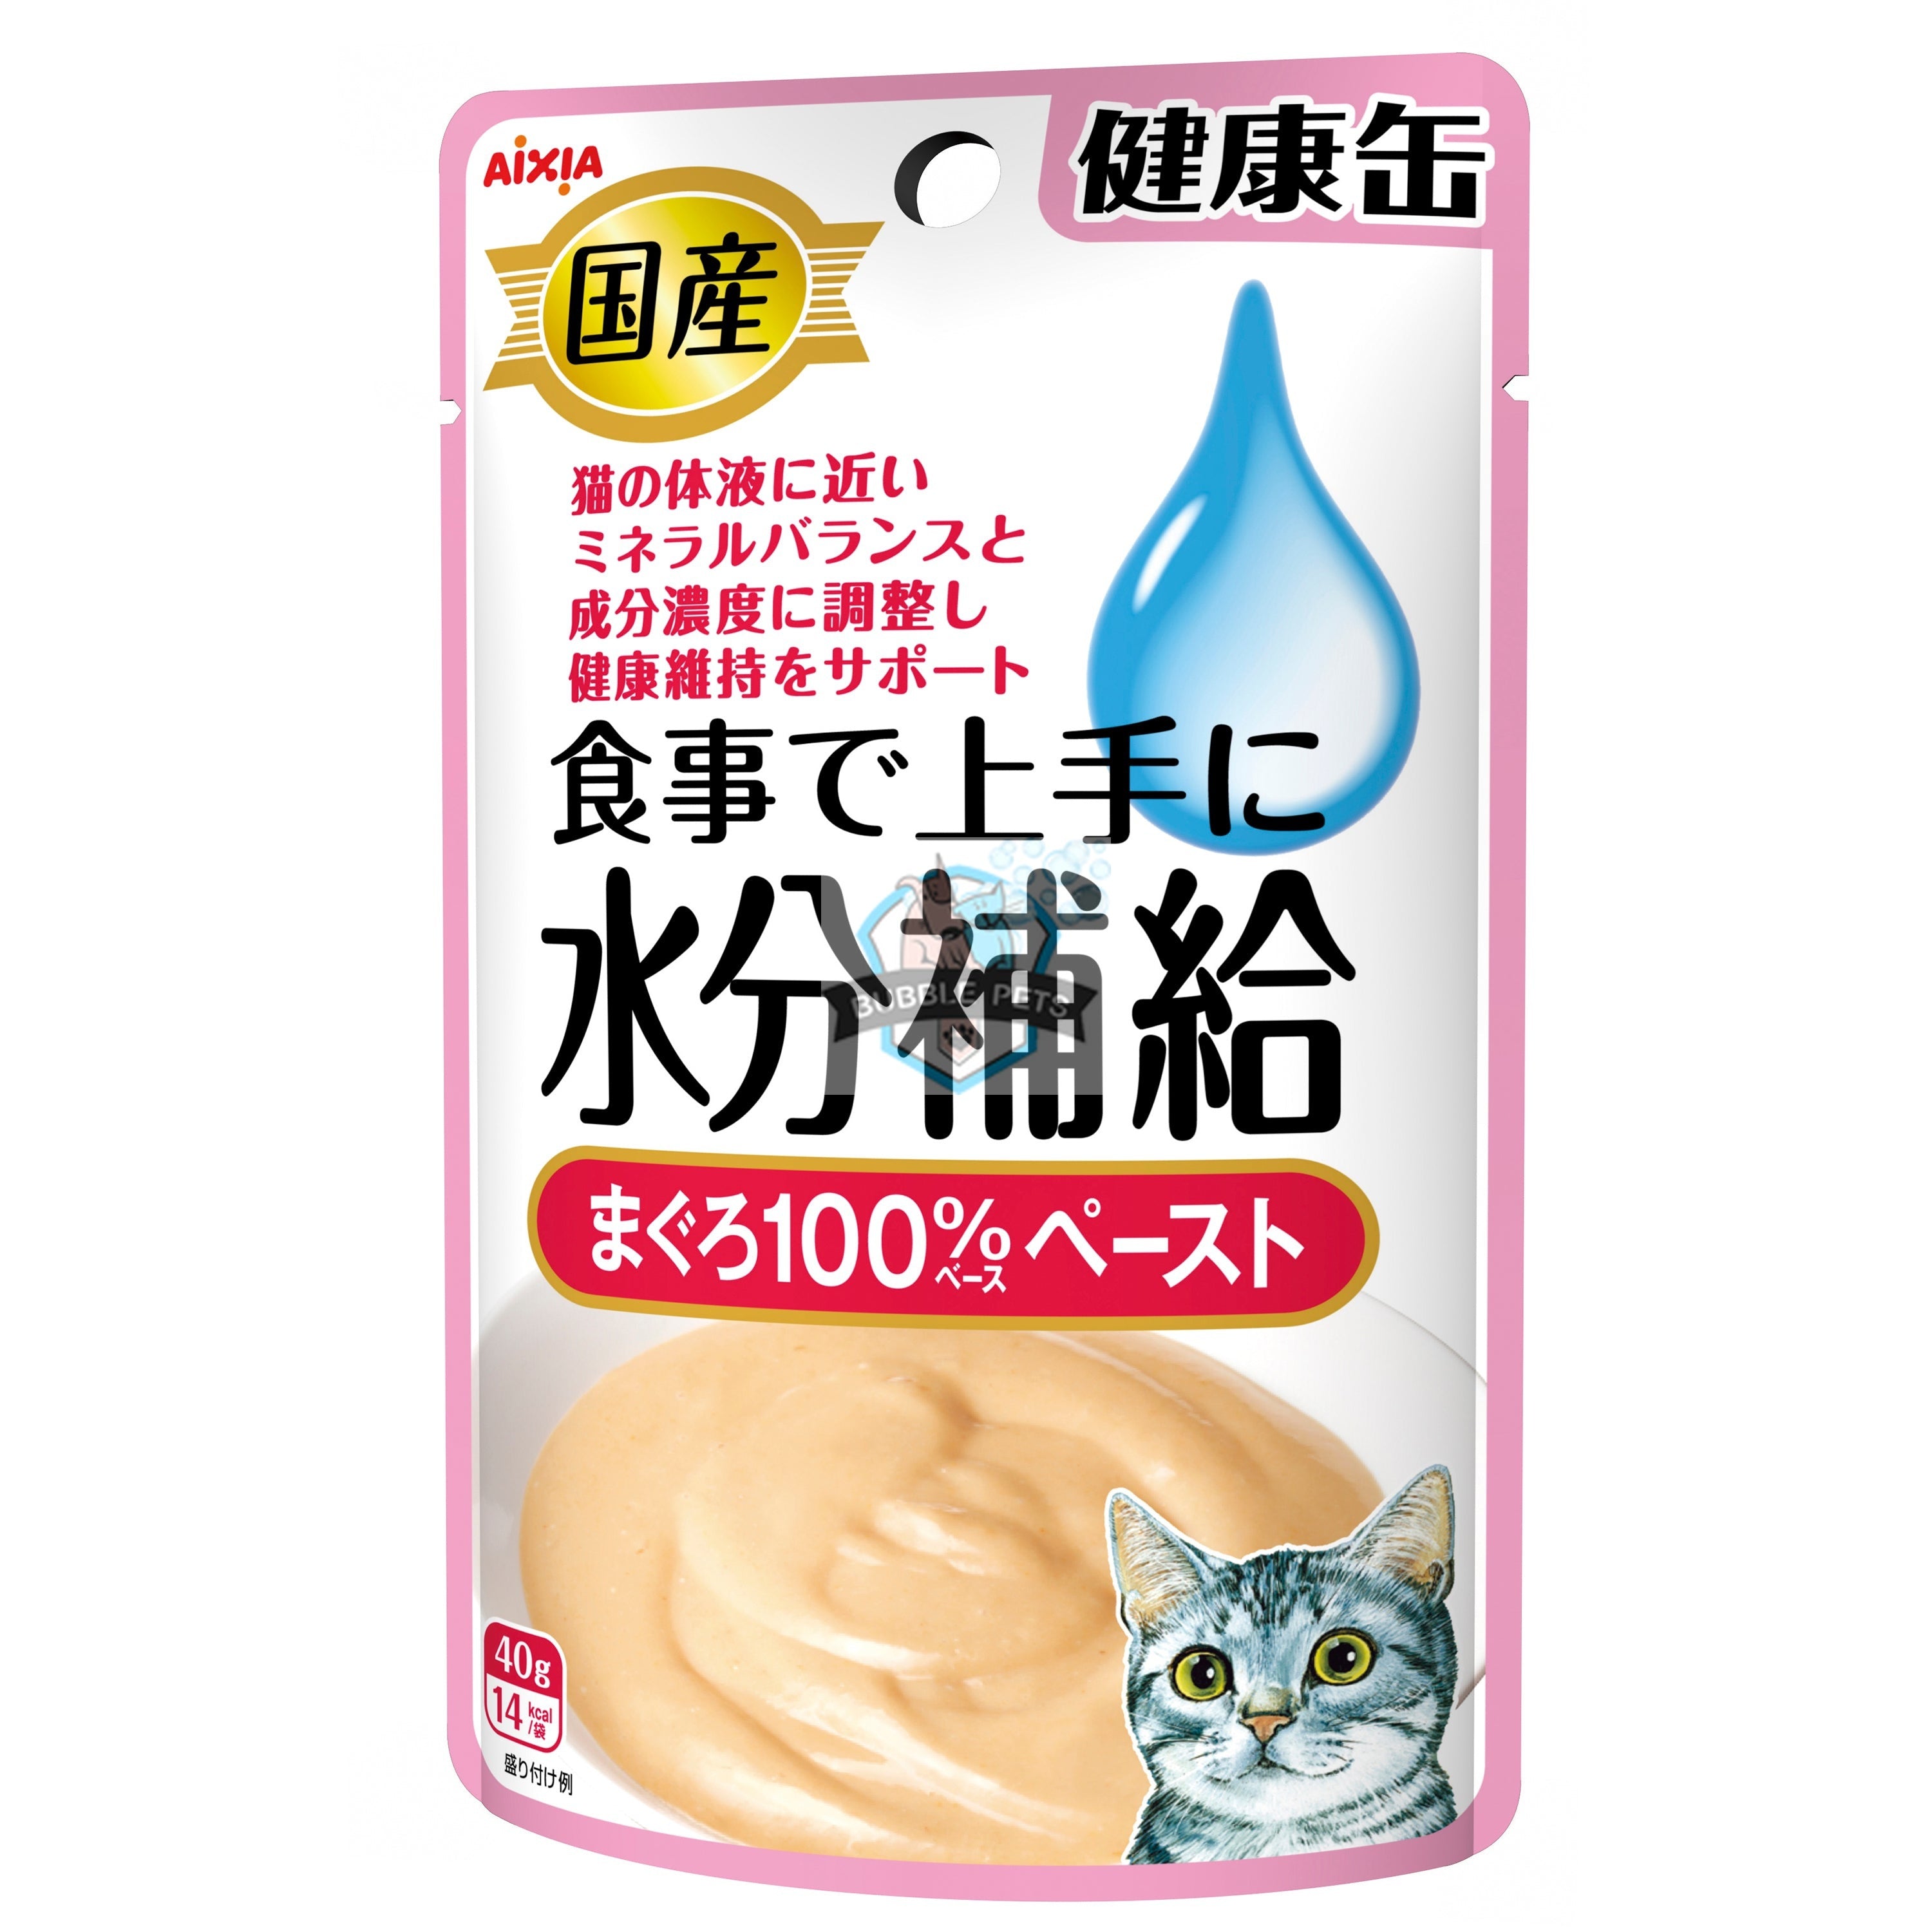 Aixia Kenko Water Supplement Tuna Paste Pouch